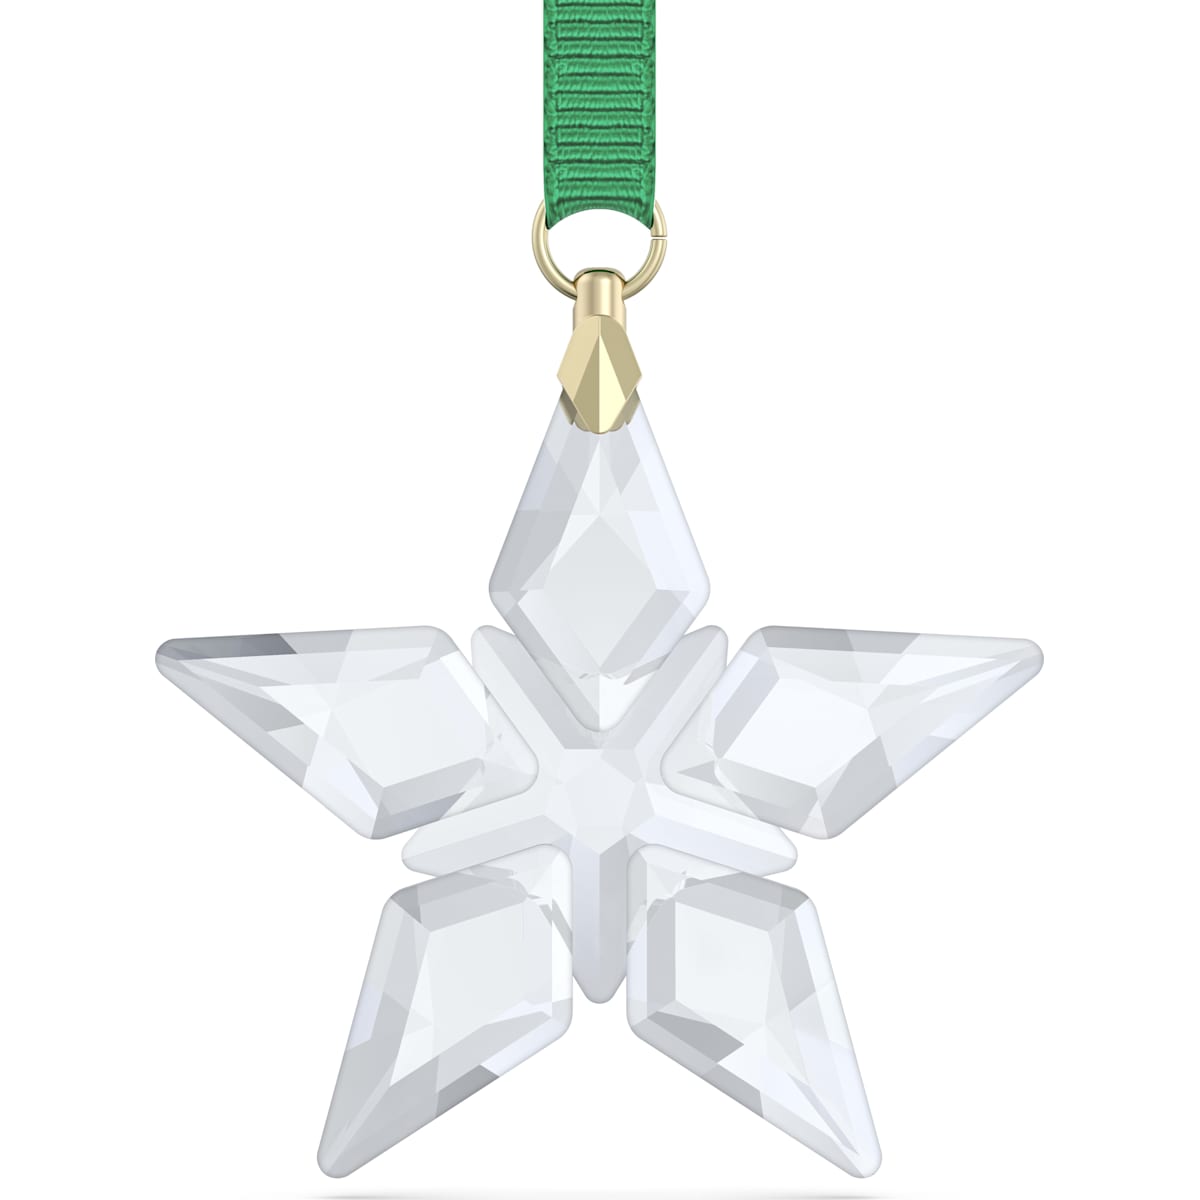 Swarovski Annual Edition Ornament Little Star - 5646769- Limited Stock